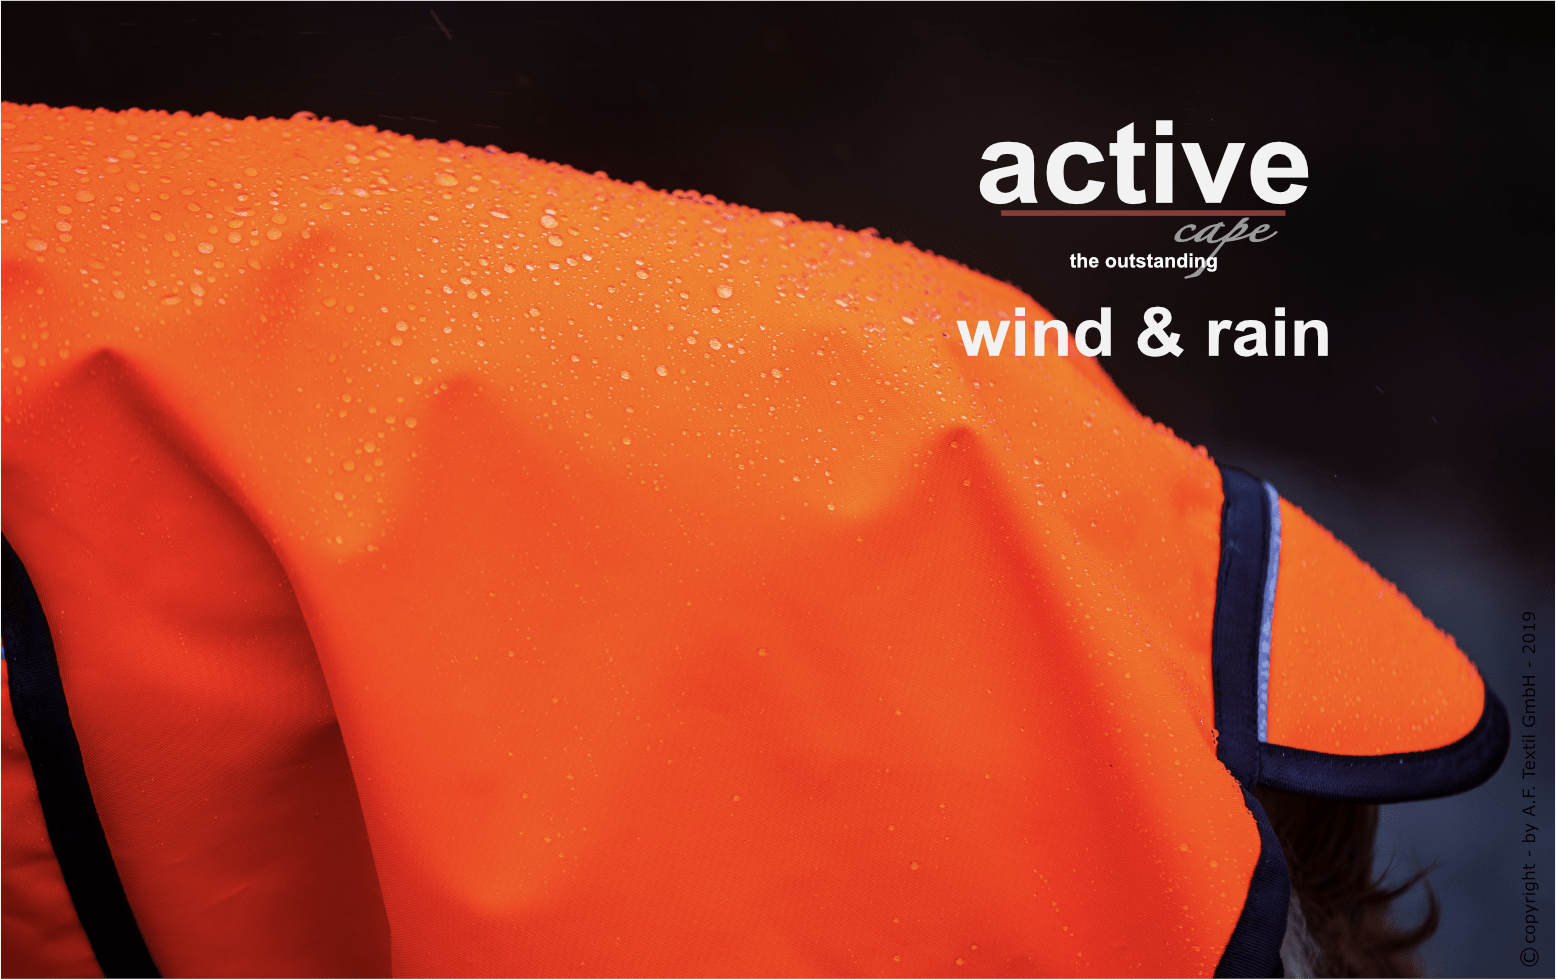 active-cape-wind-rain-orange2